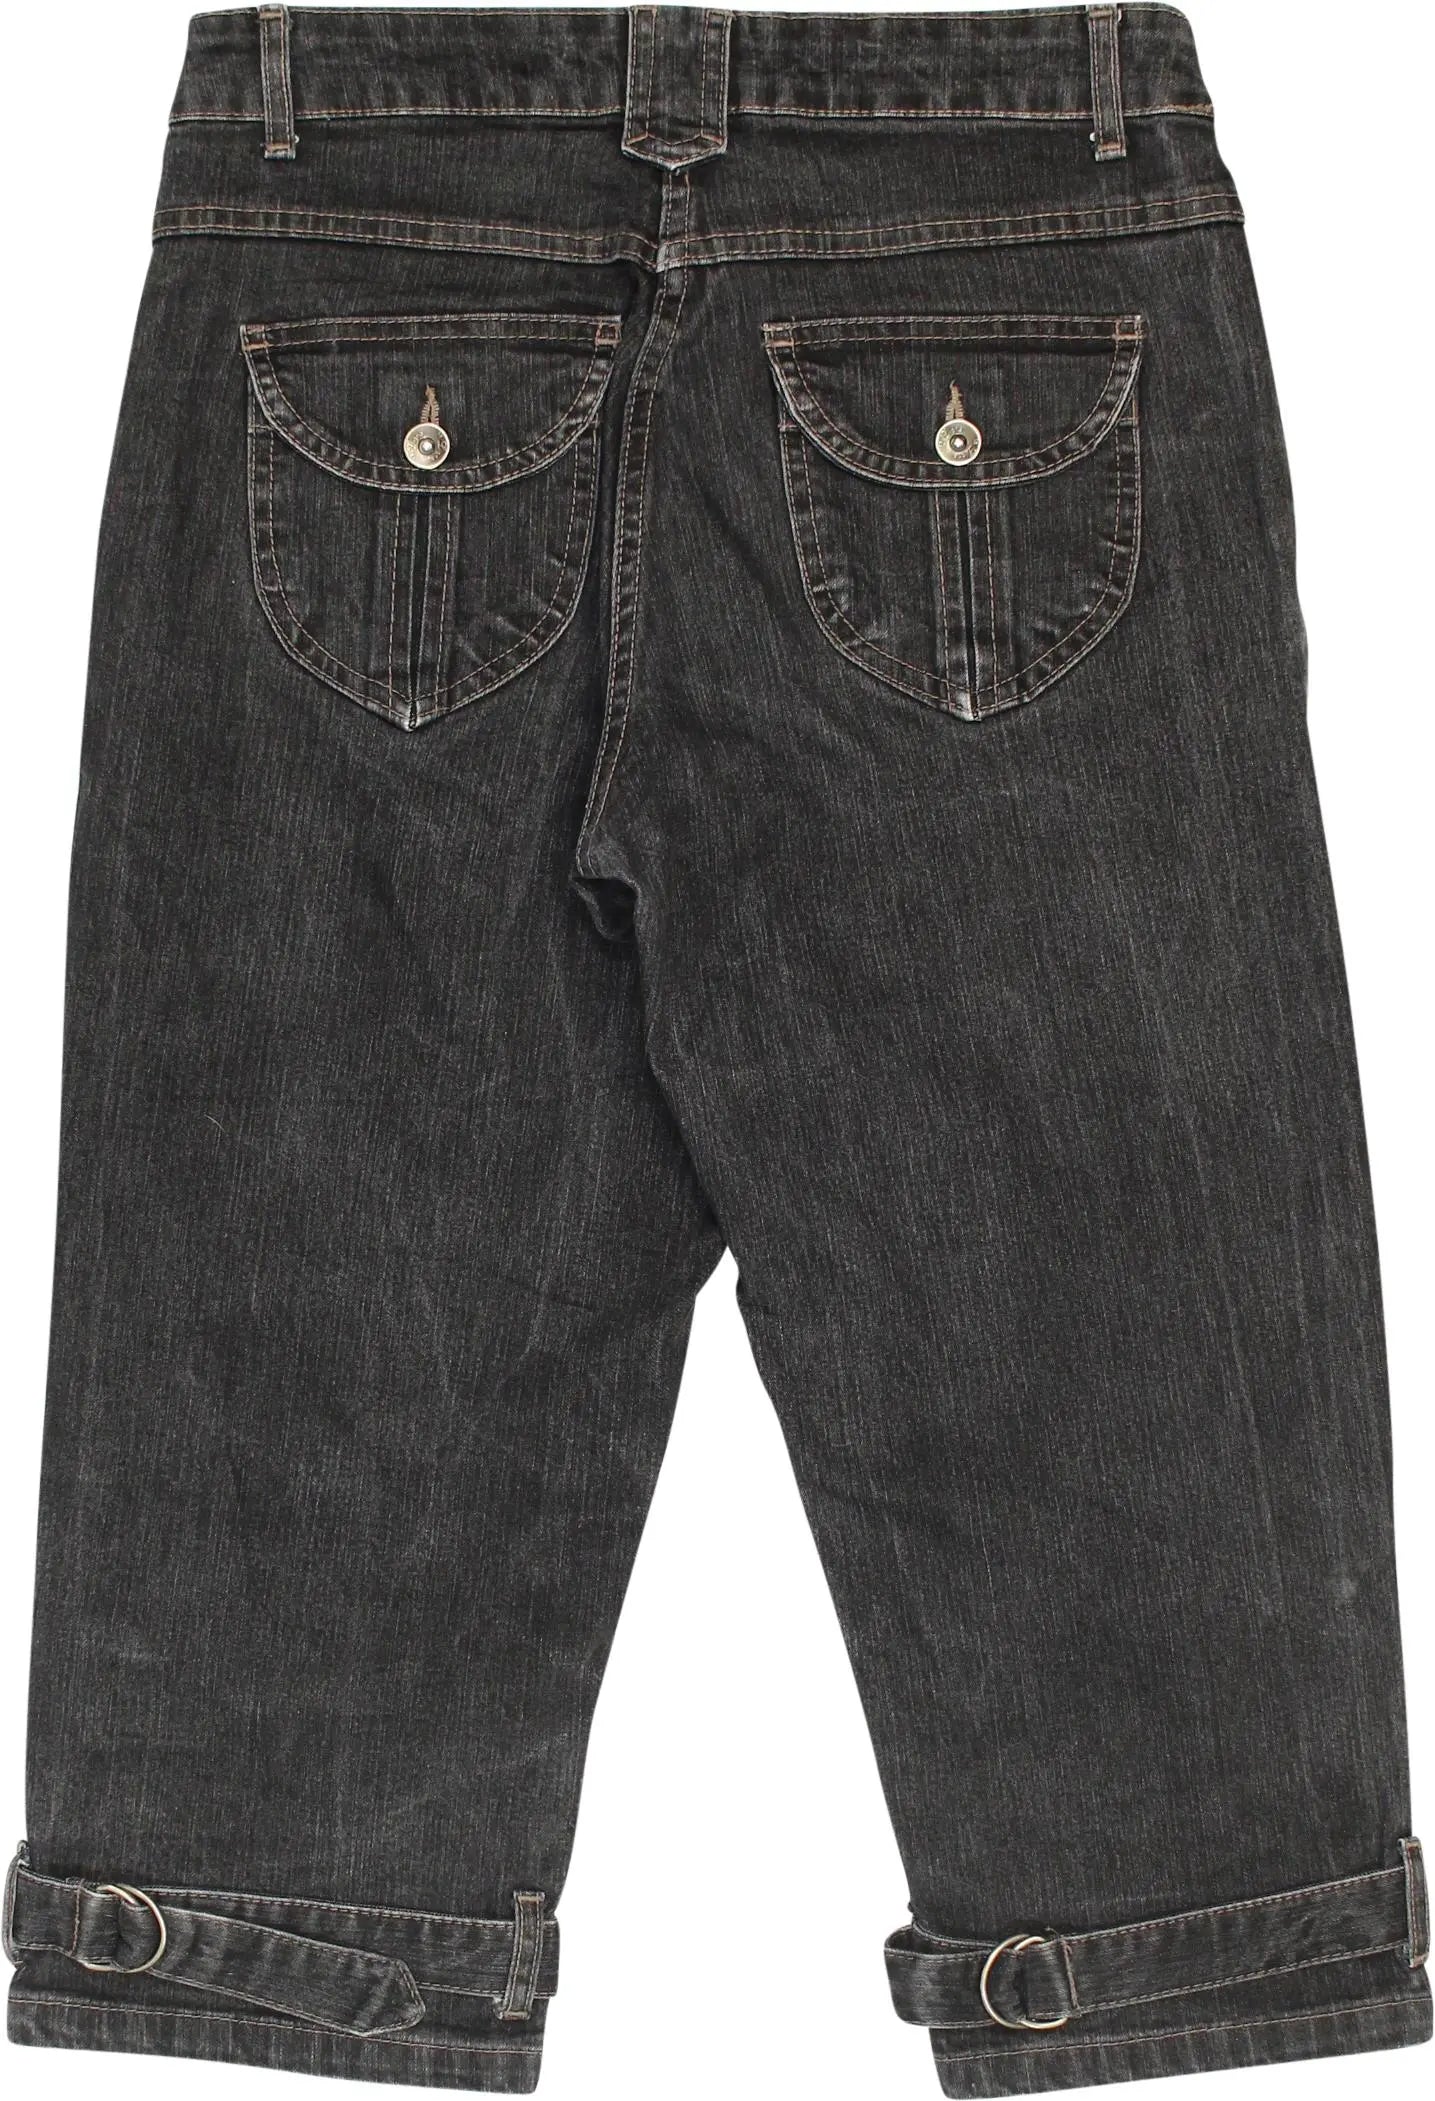 La Ligna - Capri Jeans- ThriftTale.com - Vintage and second handclothing